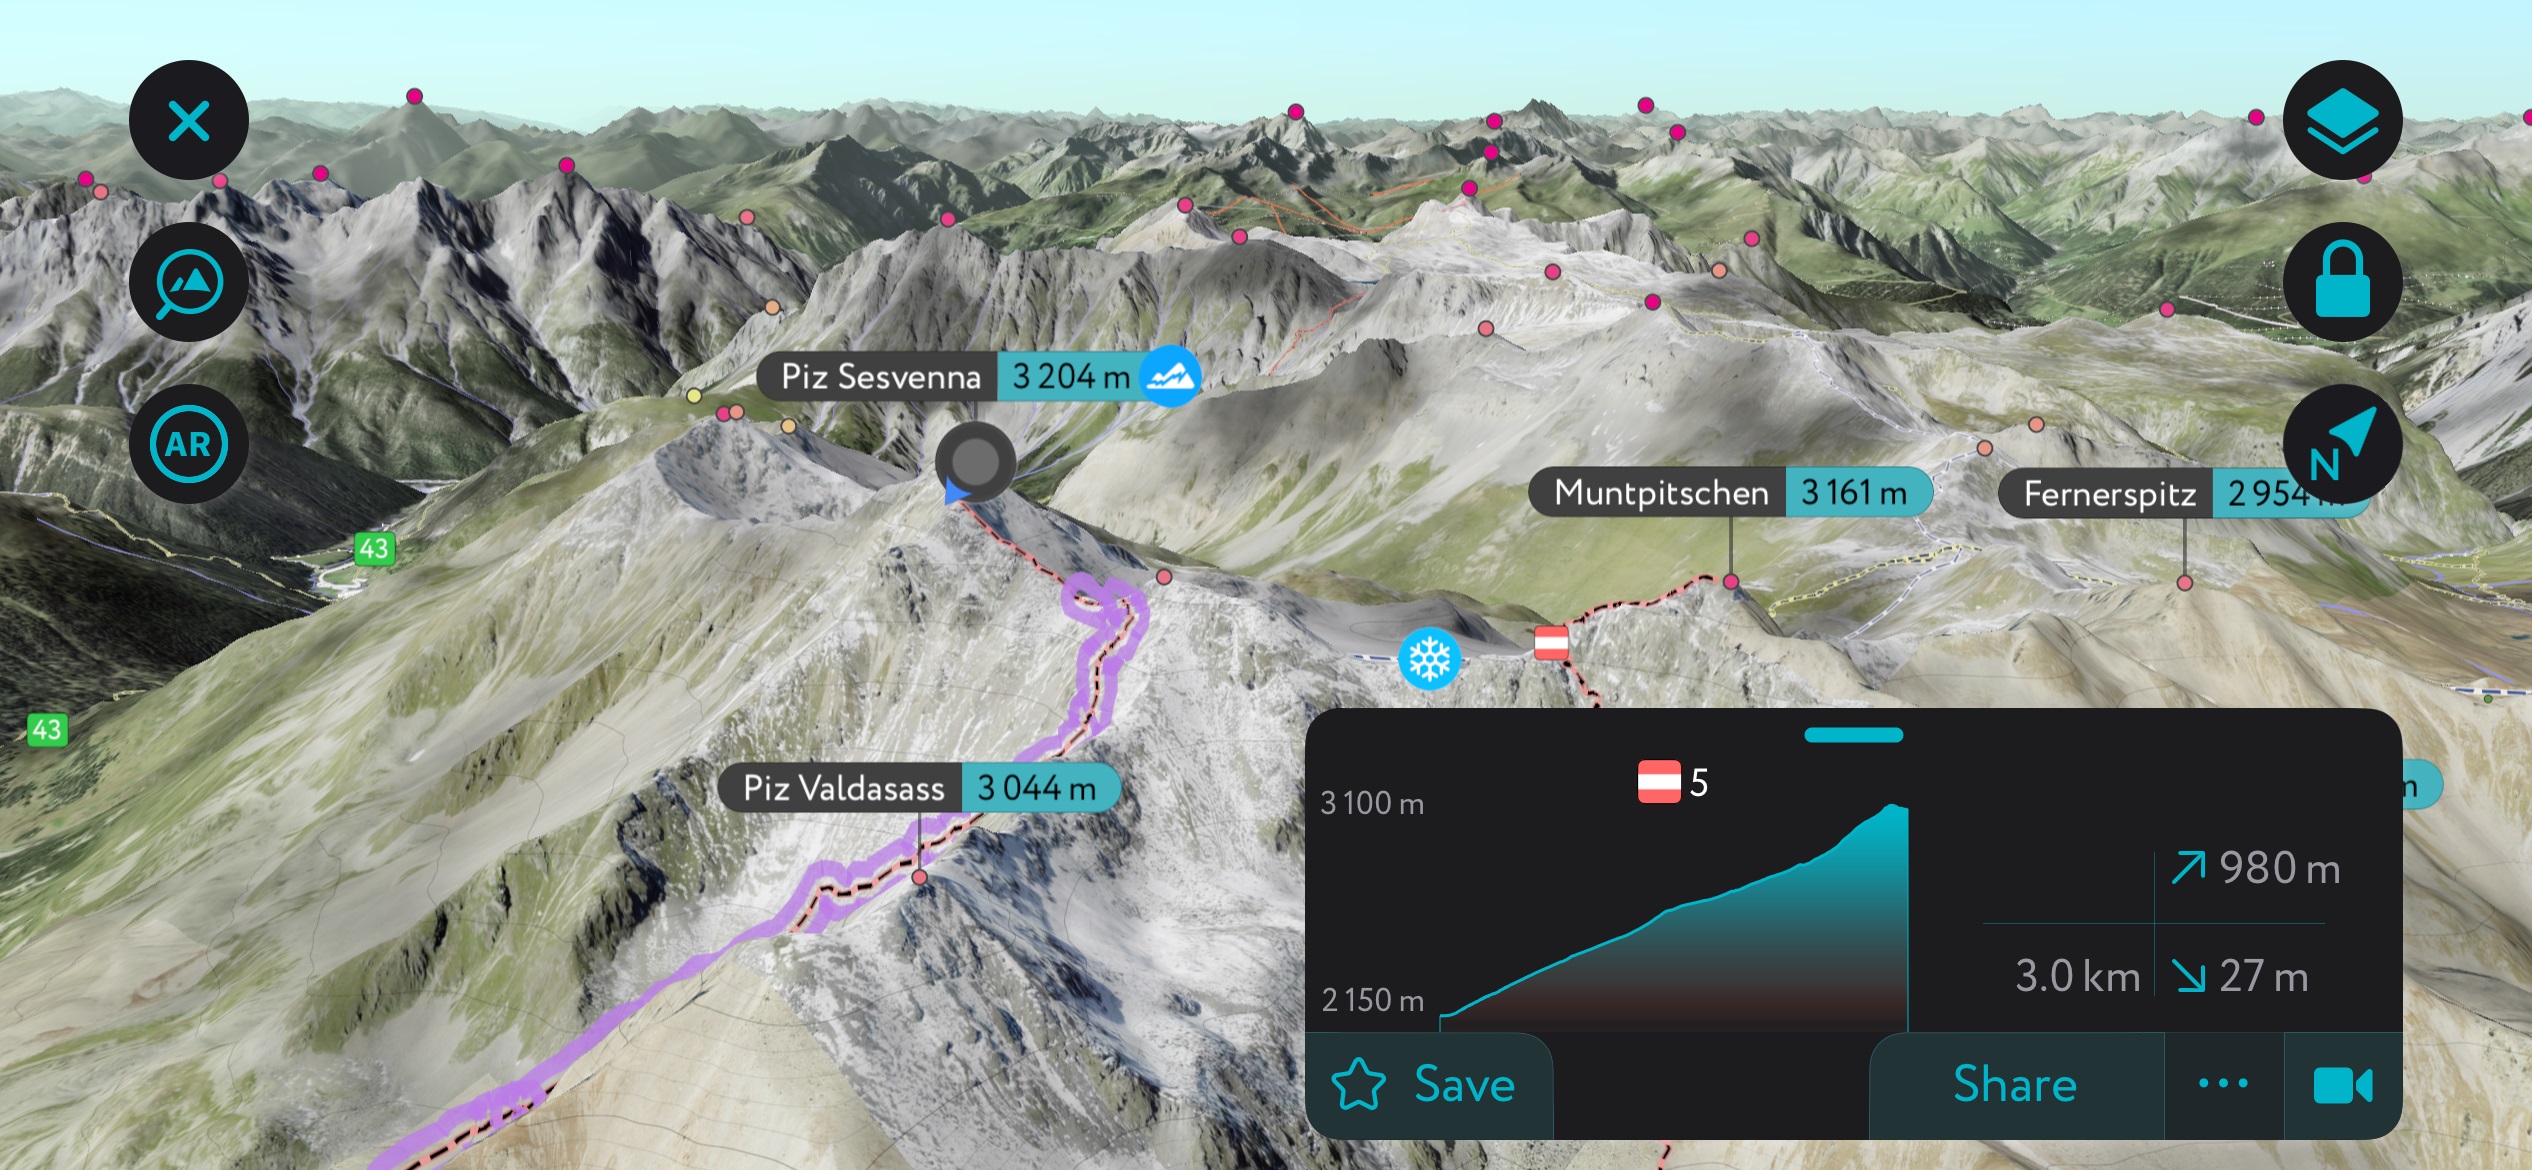 Piz Sesvenna’s East Ridge on the PeakVisor Mobile App. Sesvenna Alps